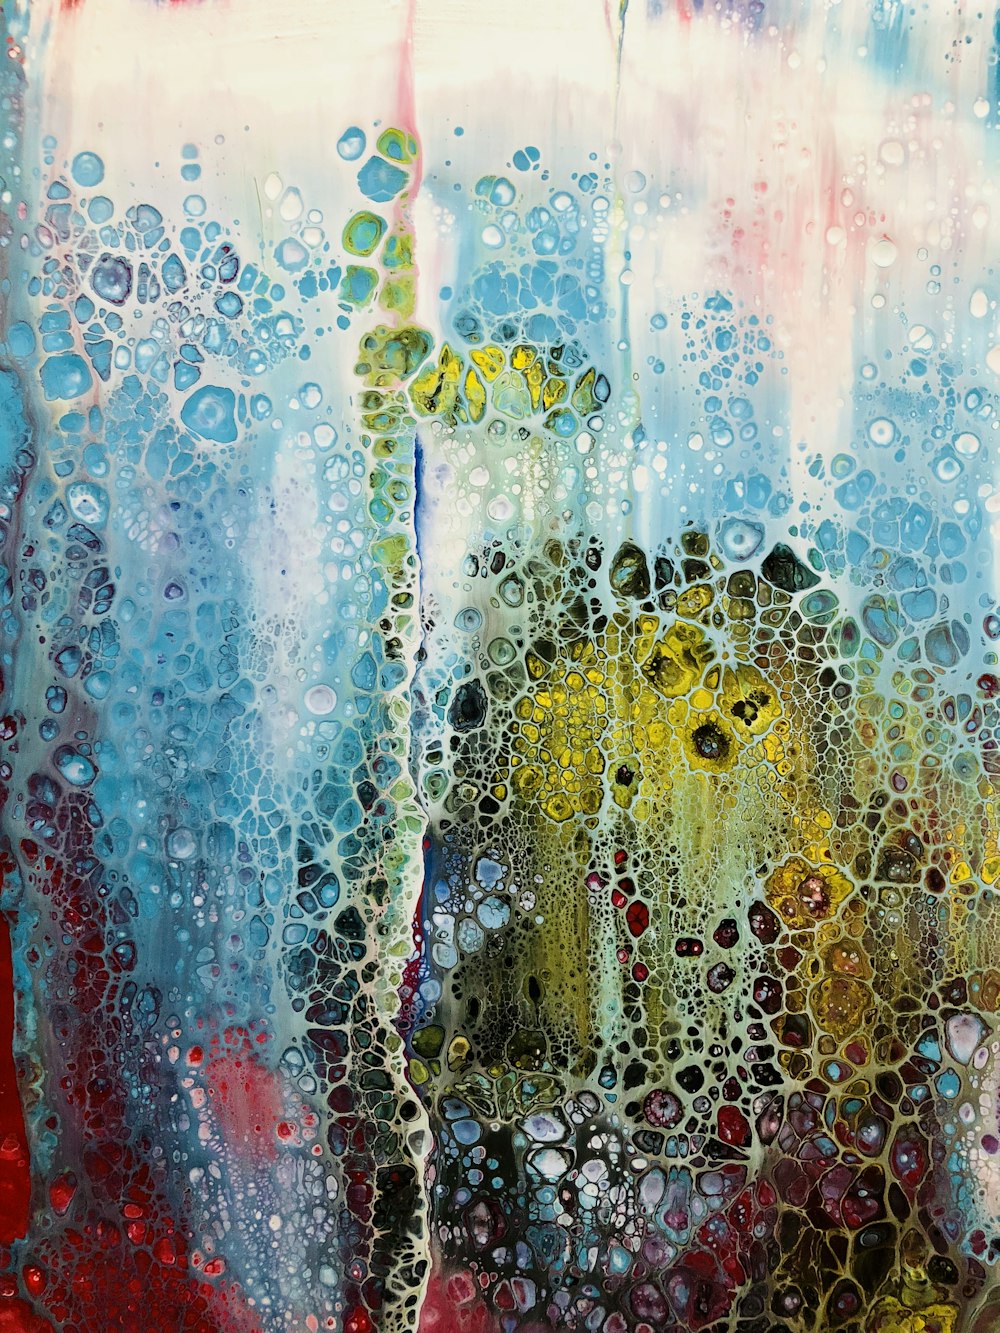 water droplets on glass window